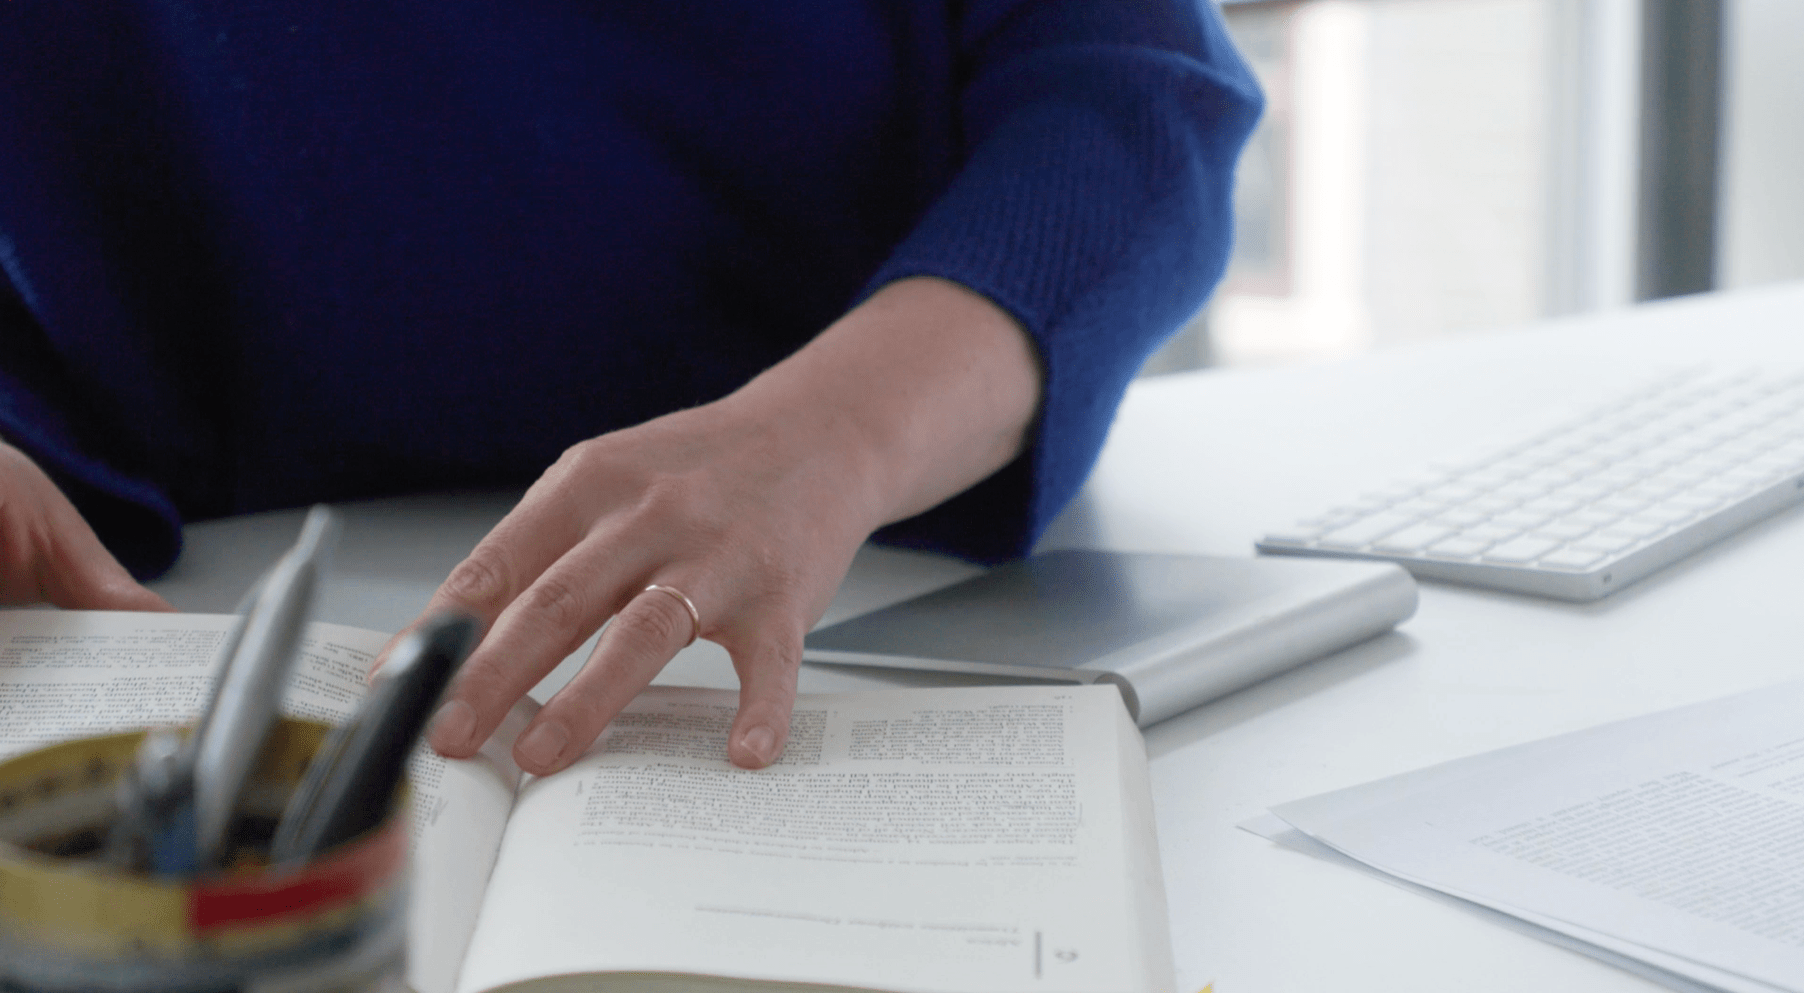 Closeup of hands opening a book